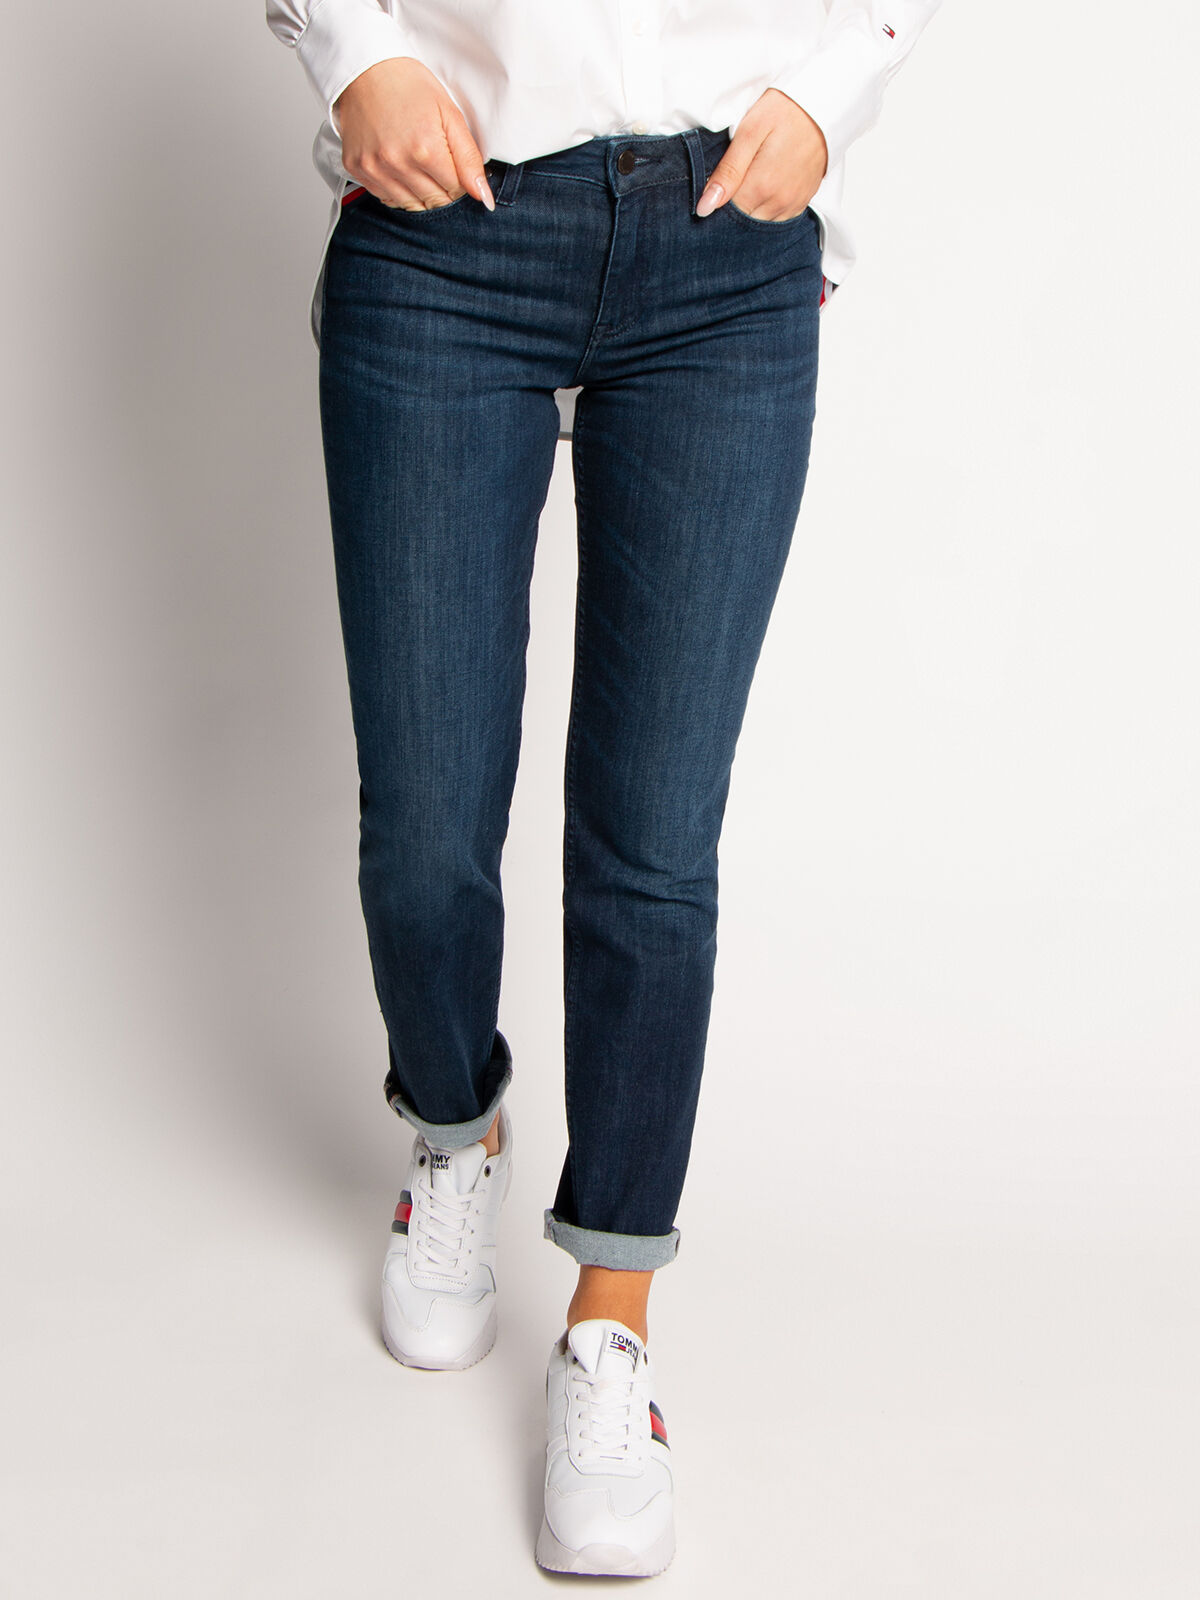 hilfiger jeans straight fit